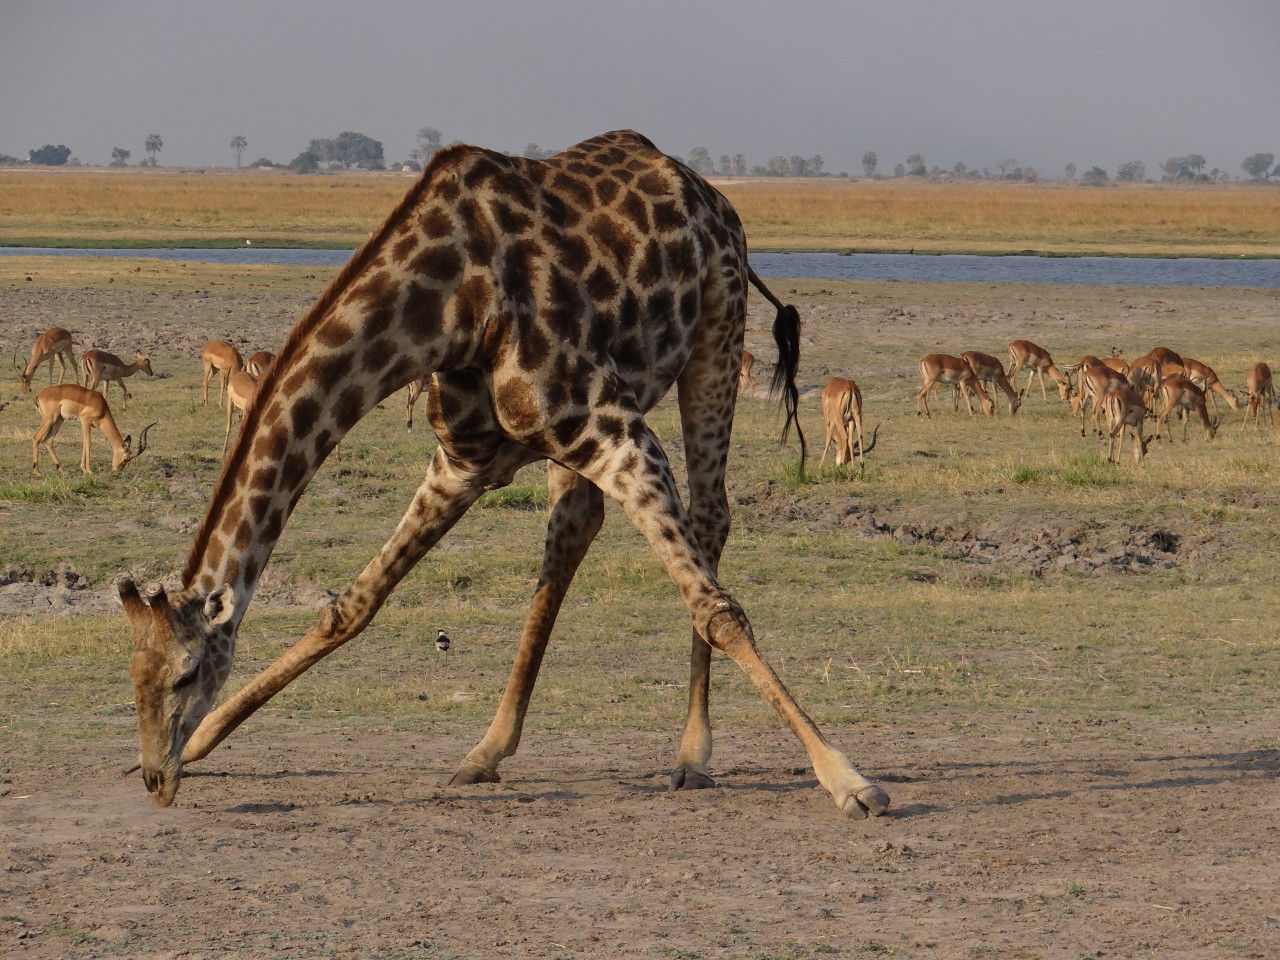 Giraffe eating in Botswana safari photo